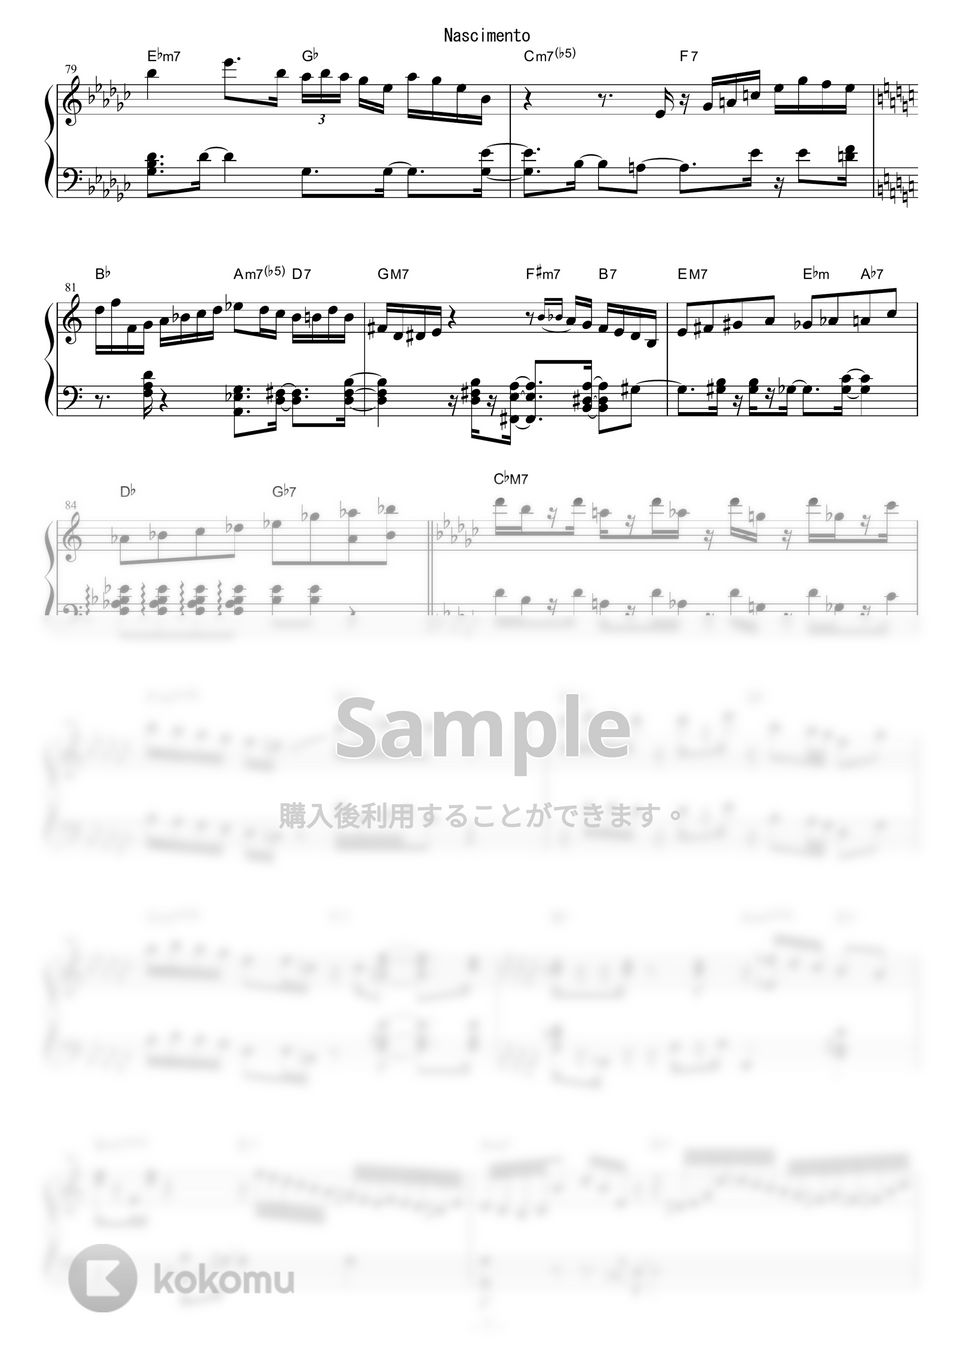 Tommy Flanagan - Nascimento 楽譜 by piano*score